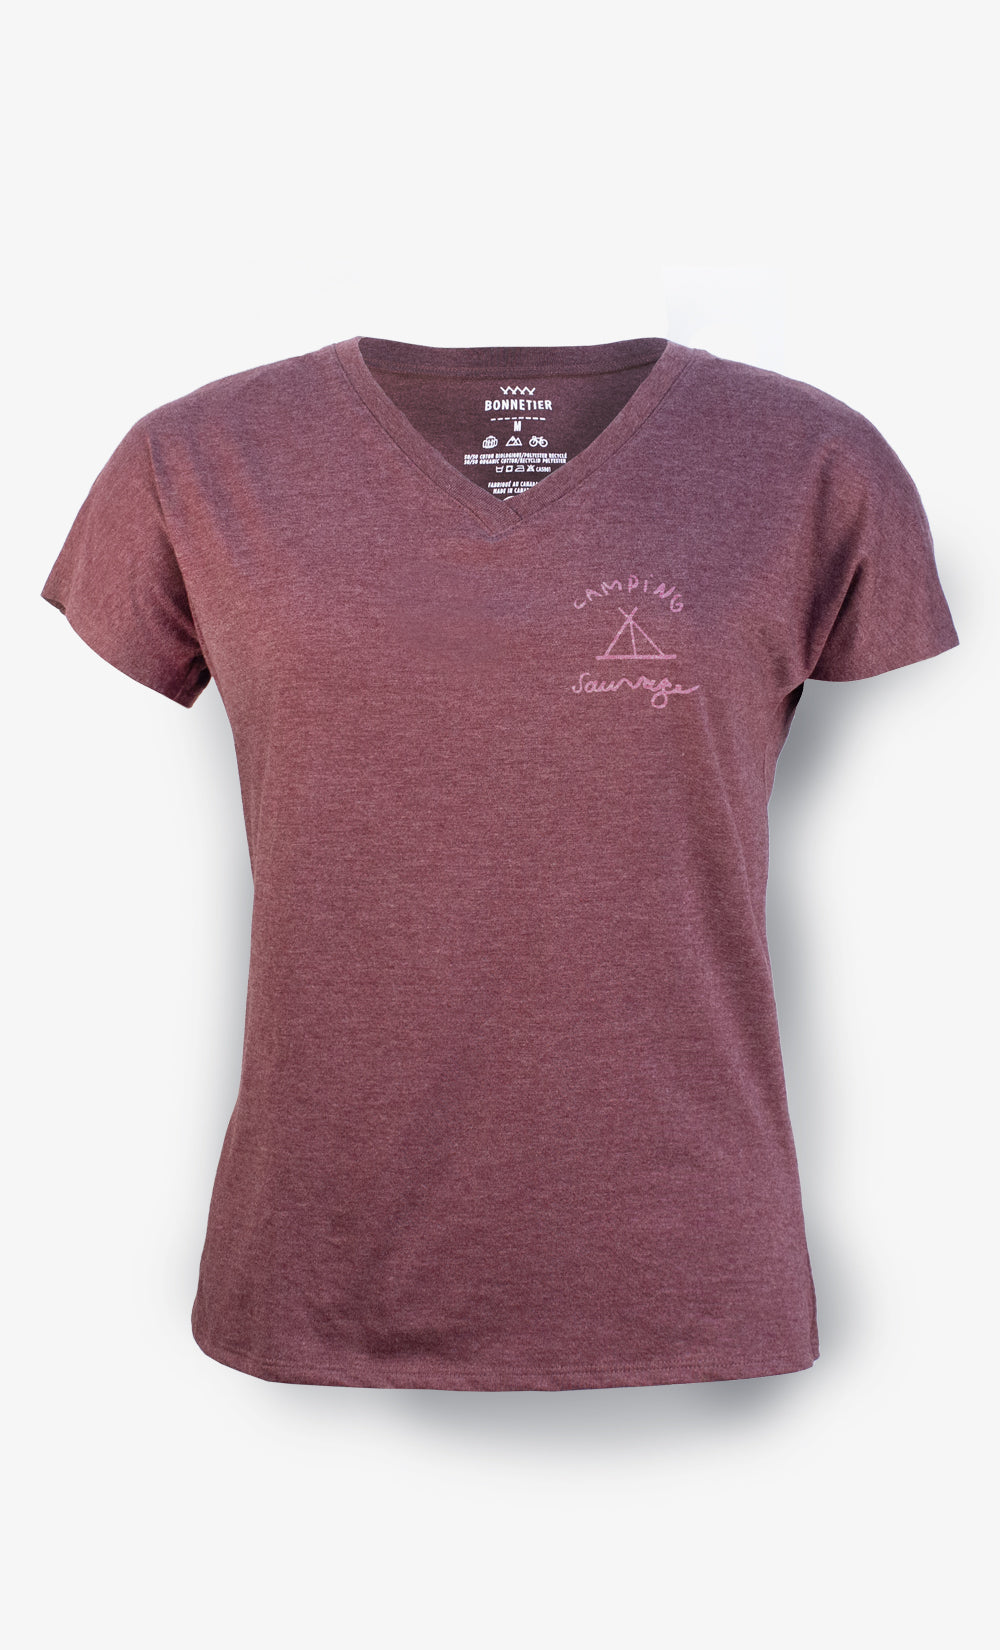 Purple Women's T-Shirt - Wild Camping